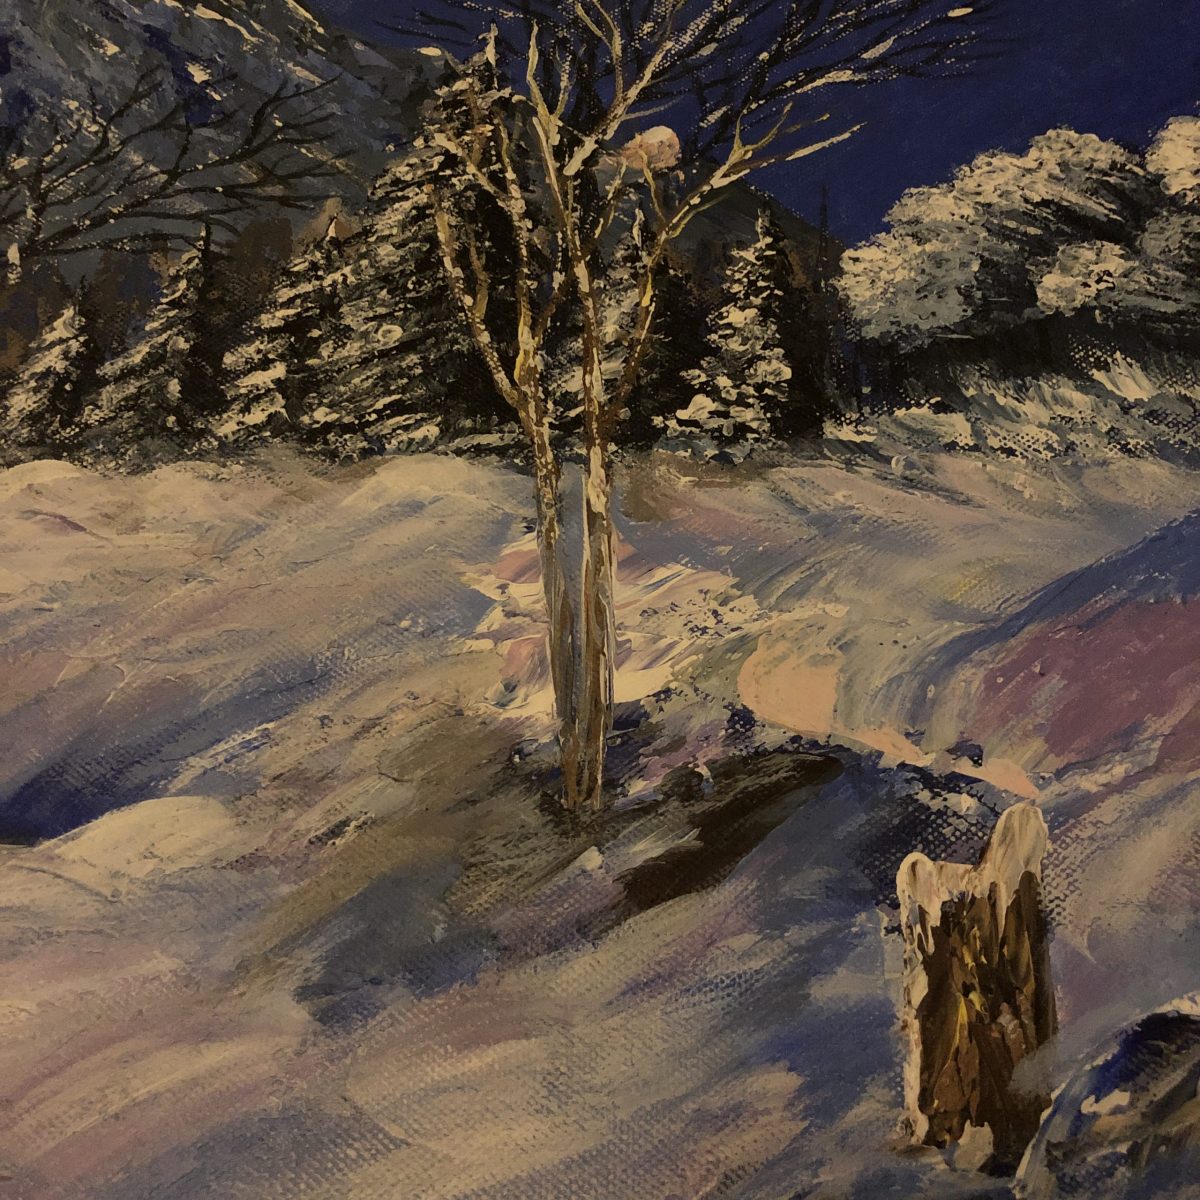 a snowy ewening plan on the snowy tree